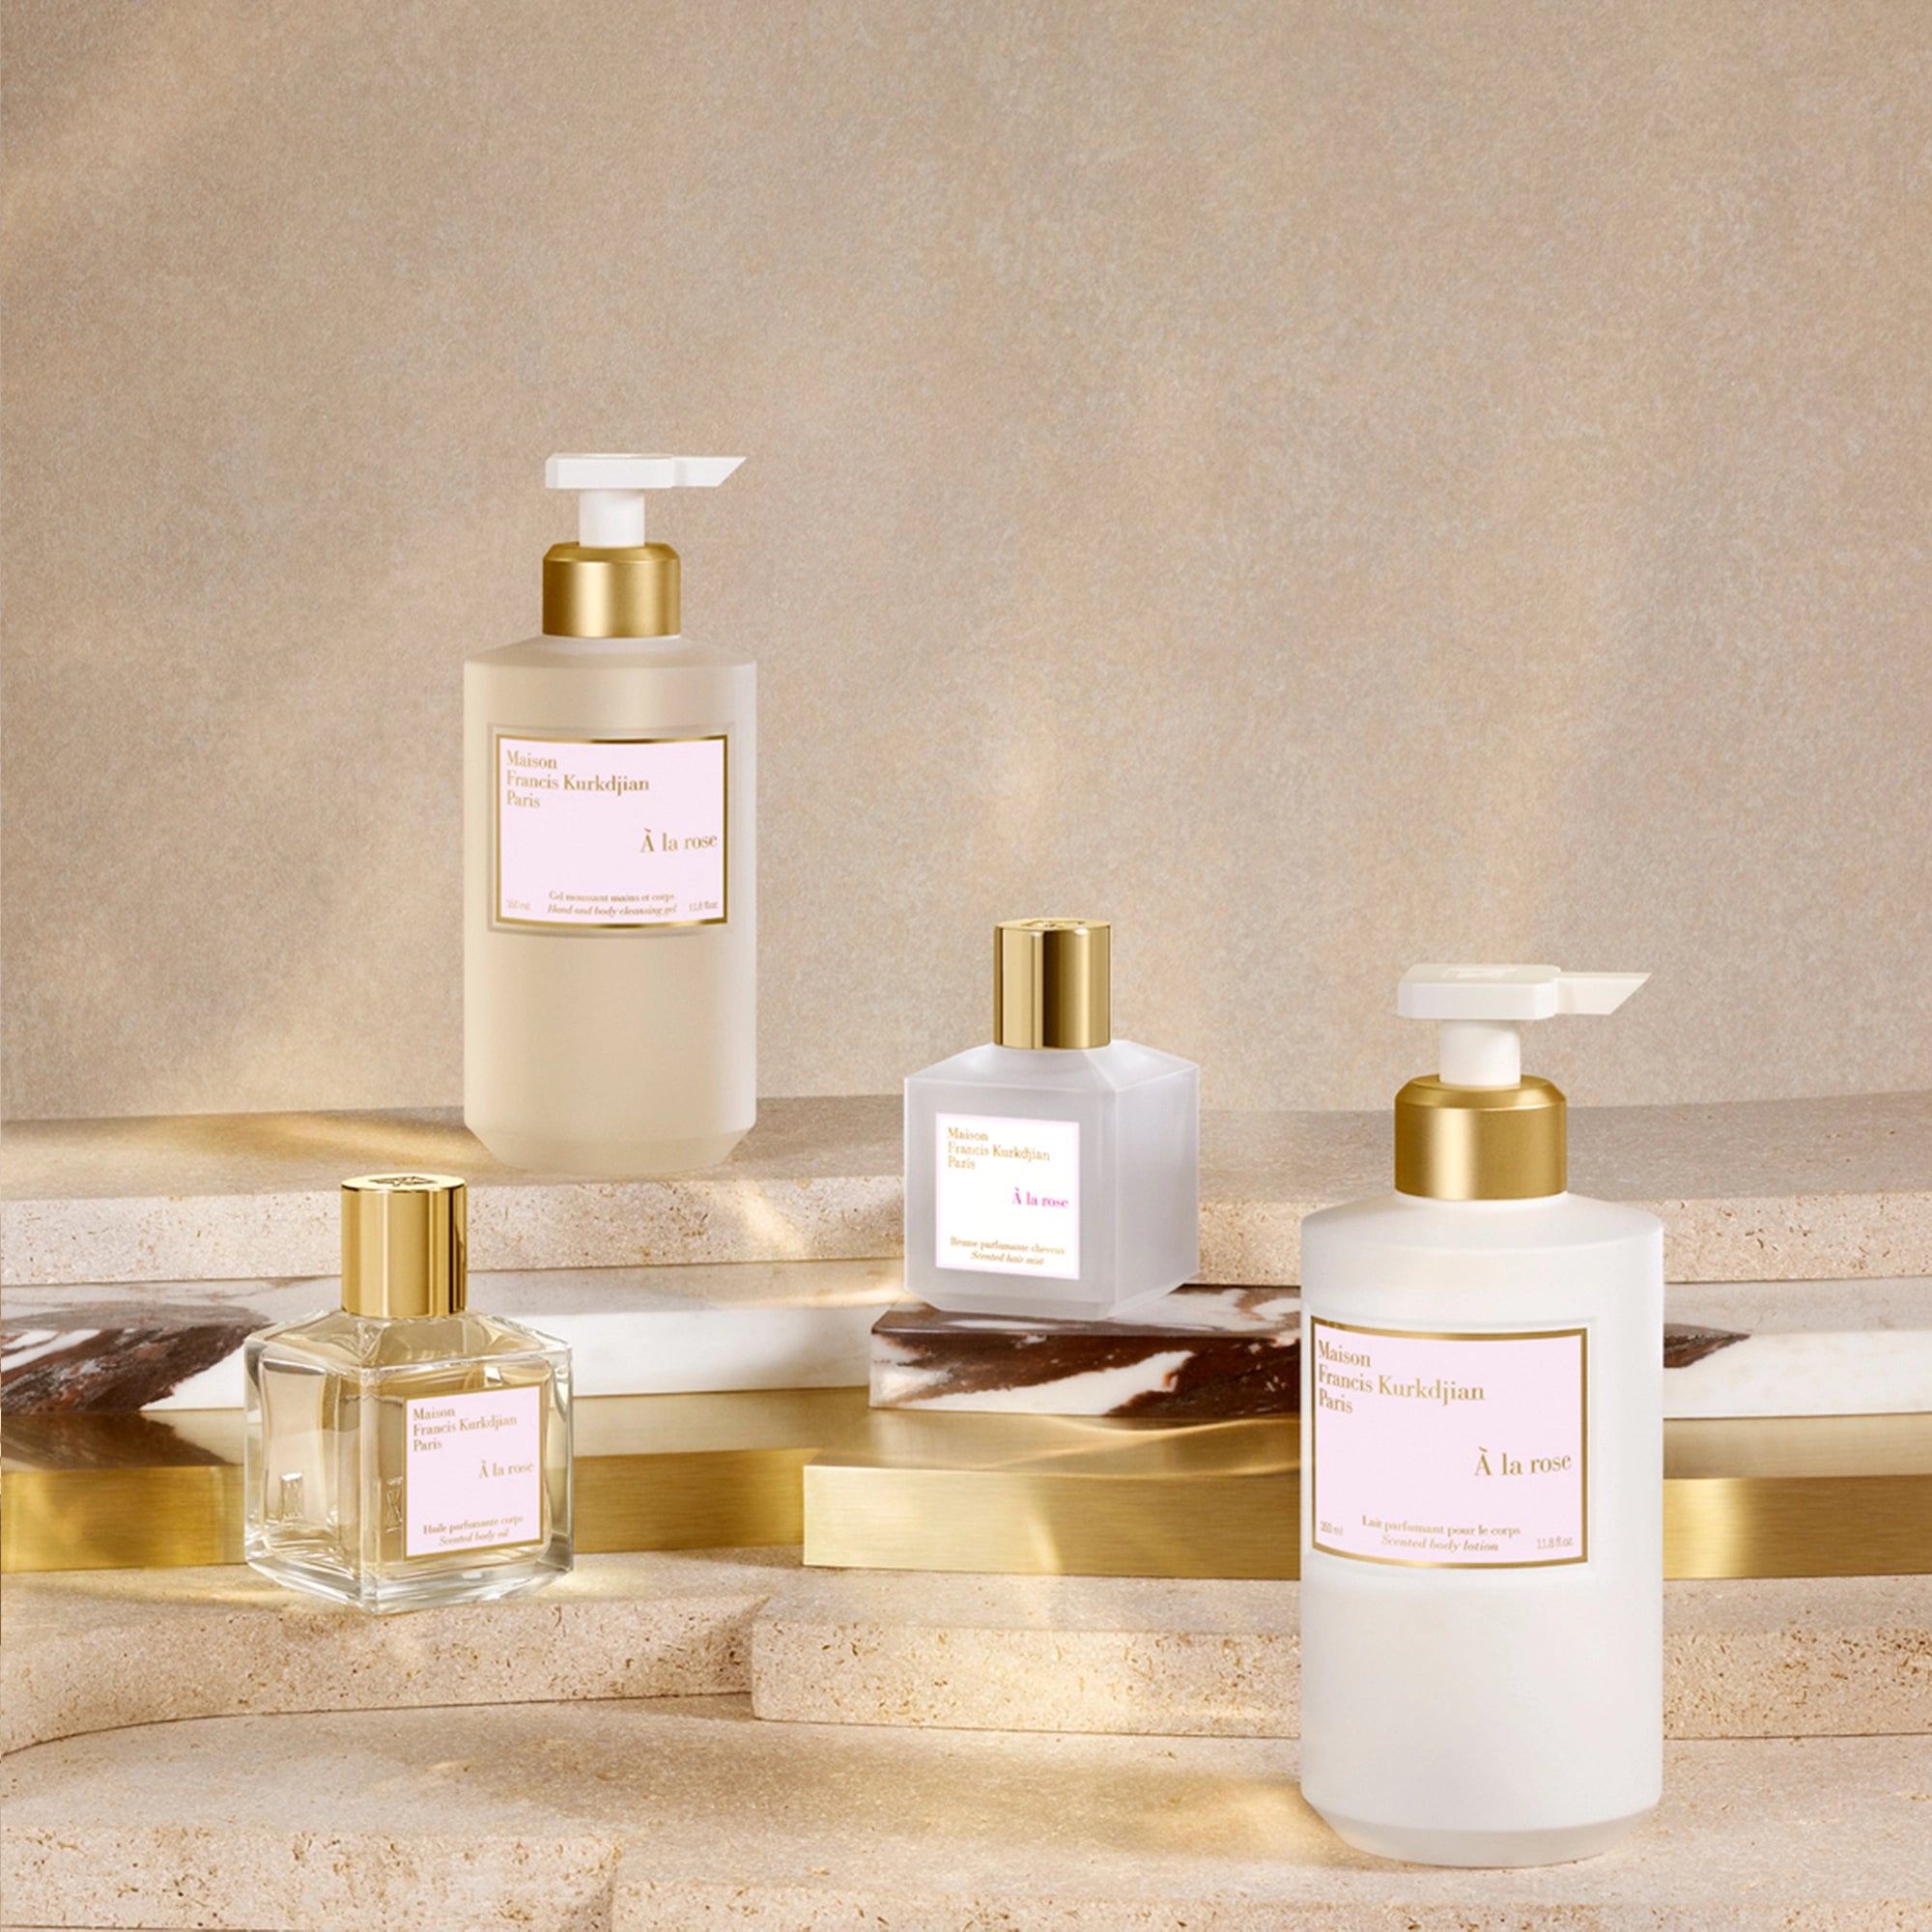 Maison Francis Kurkdjian A La Rose Scented Hand Cream | My Perfume Shop Australia